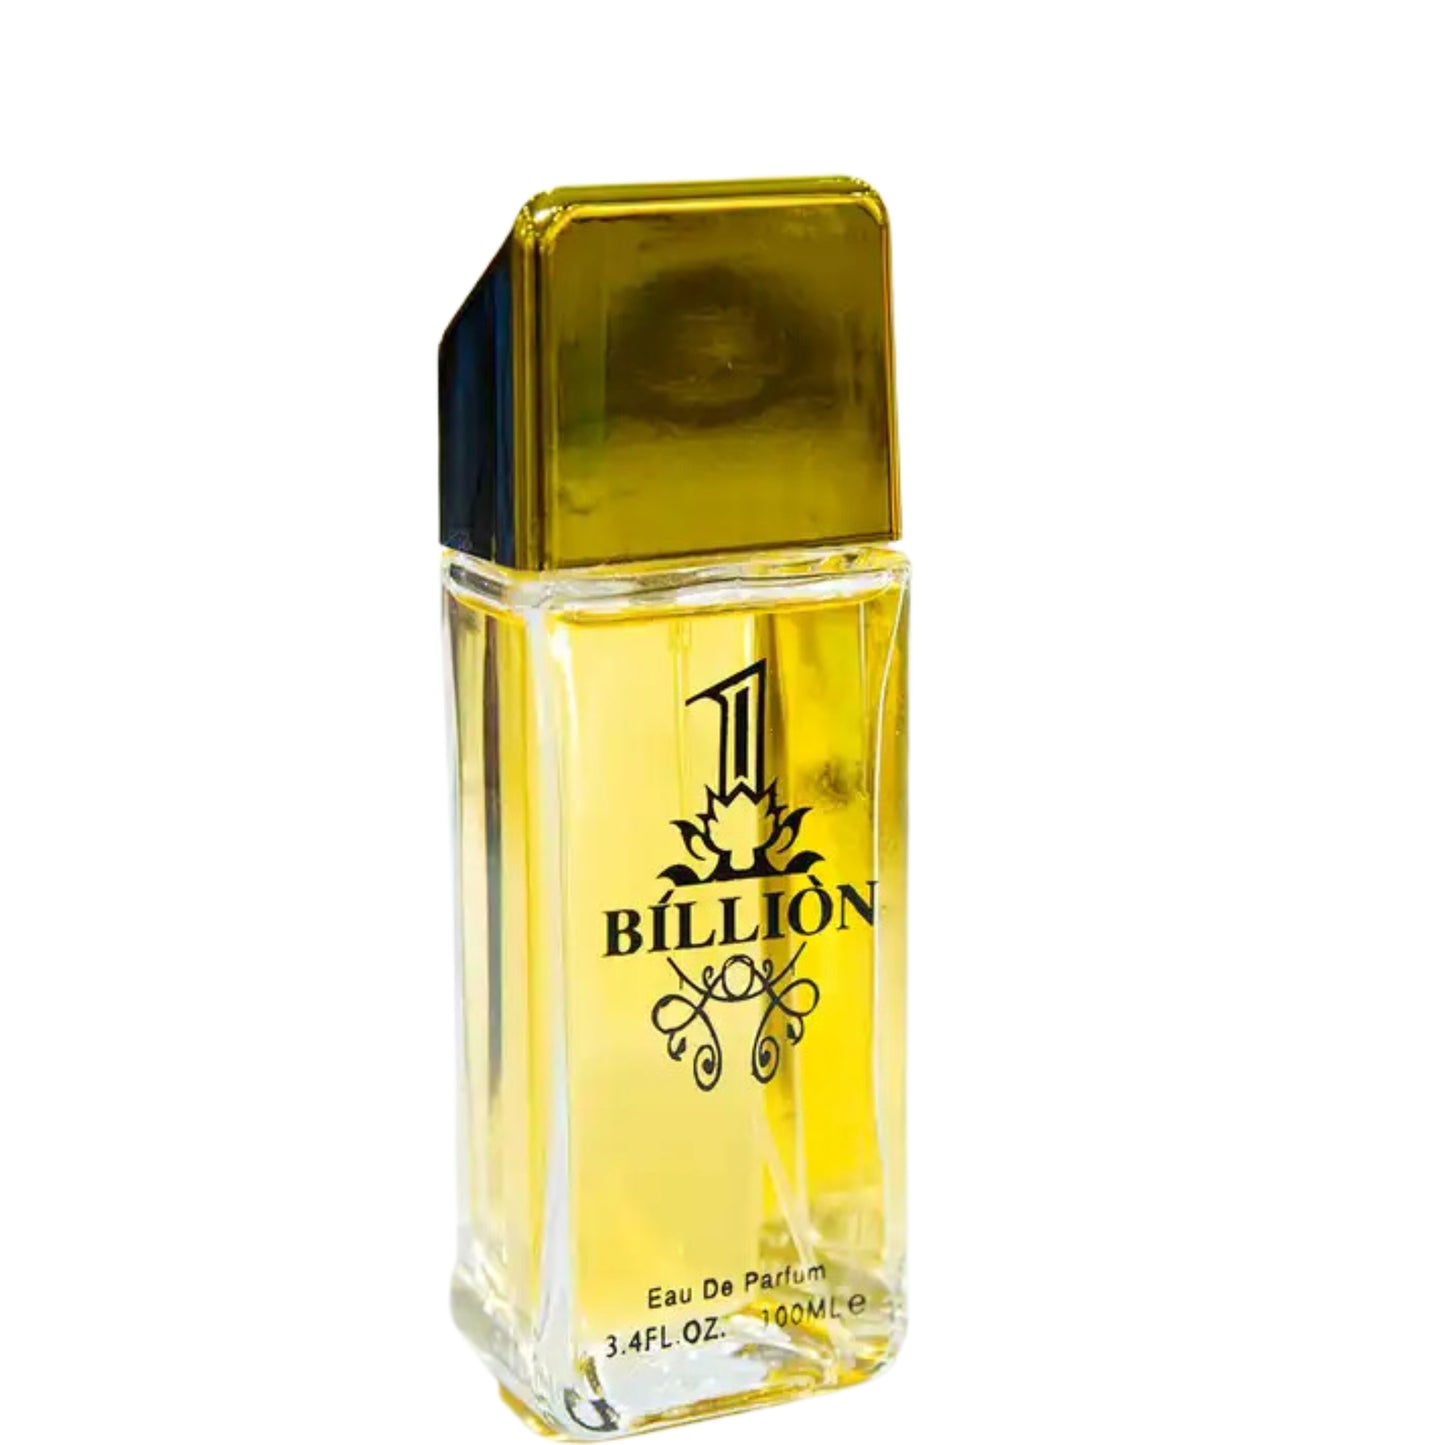 1 Billion- Eau De Toilette Spray Perfume, Fragrance For Men